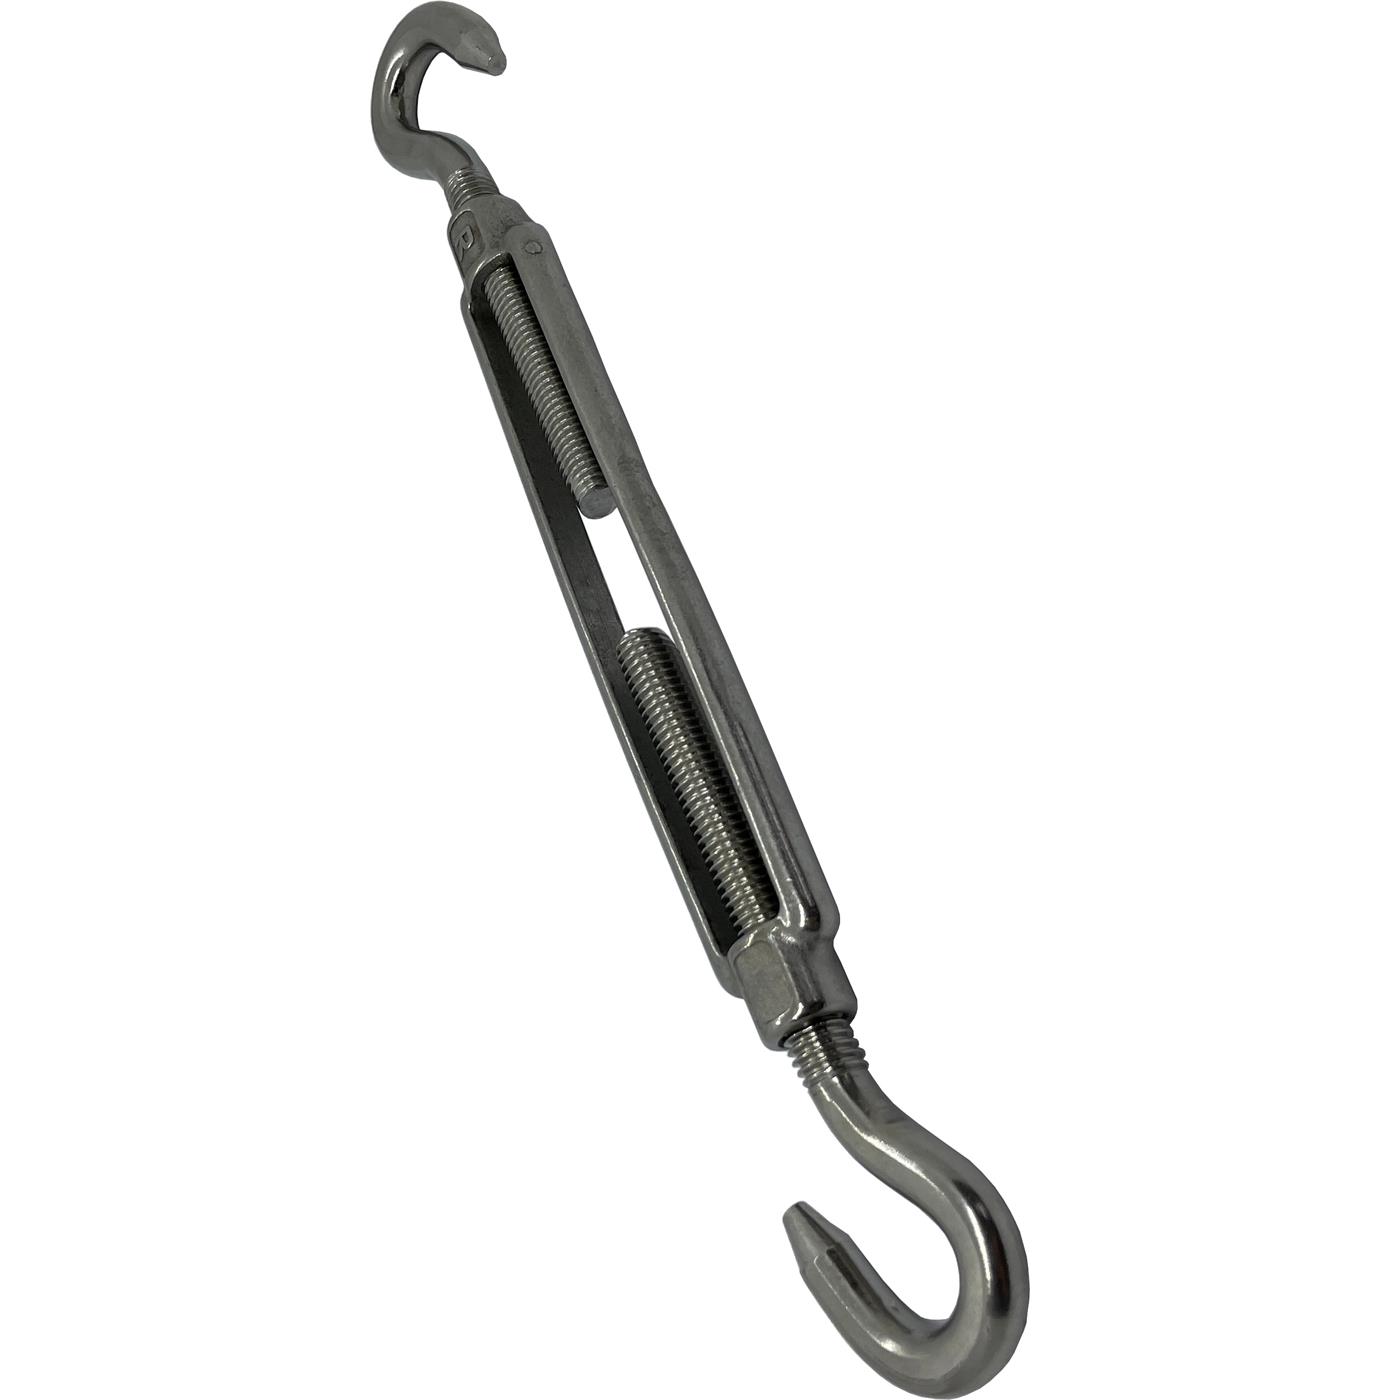 Rope tensioner Hook-Hook Stainless steel V4A 316 M6 Turnbuckle Shroud clamp